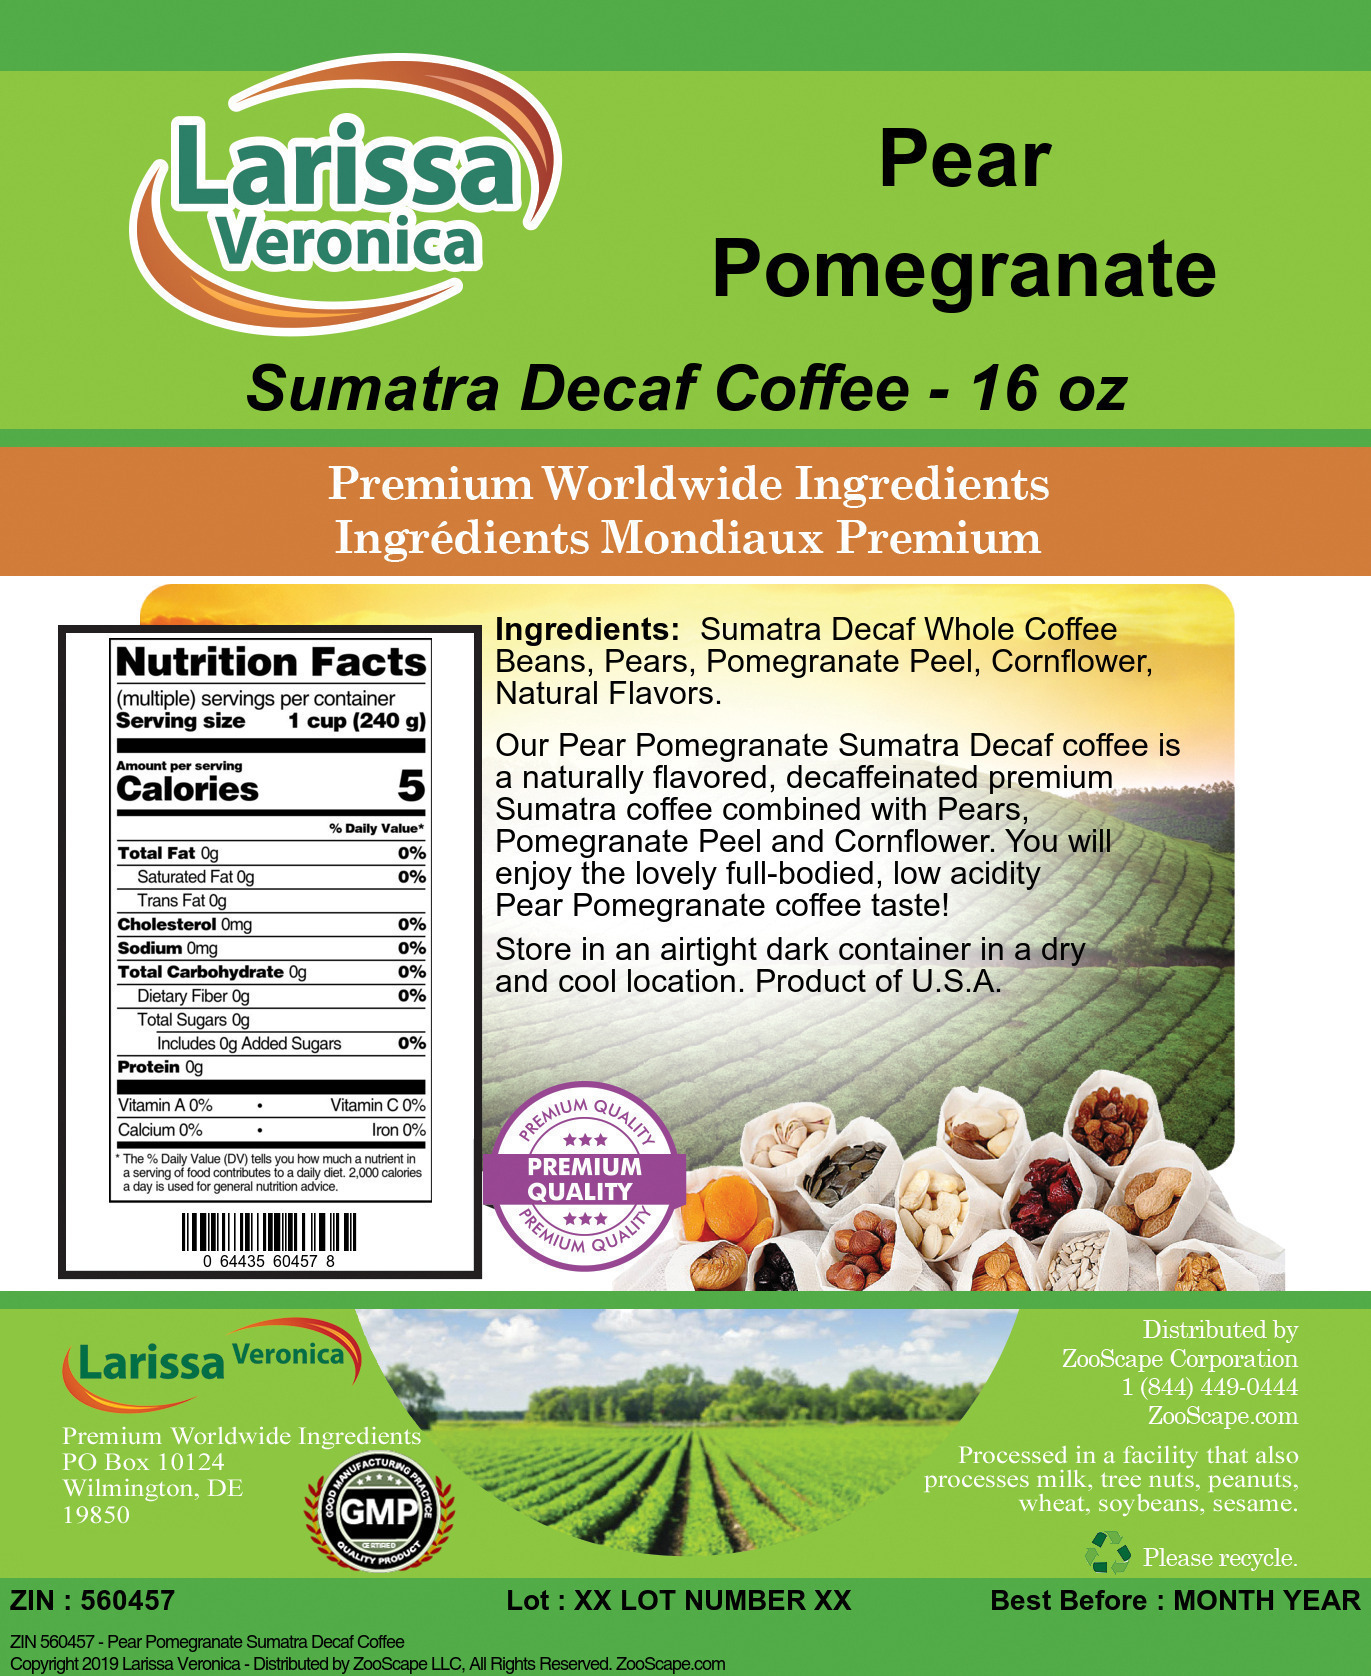 Pear Pomegranate Sumatra Decaf Coffee - Label